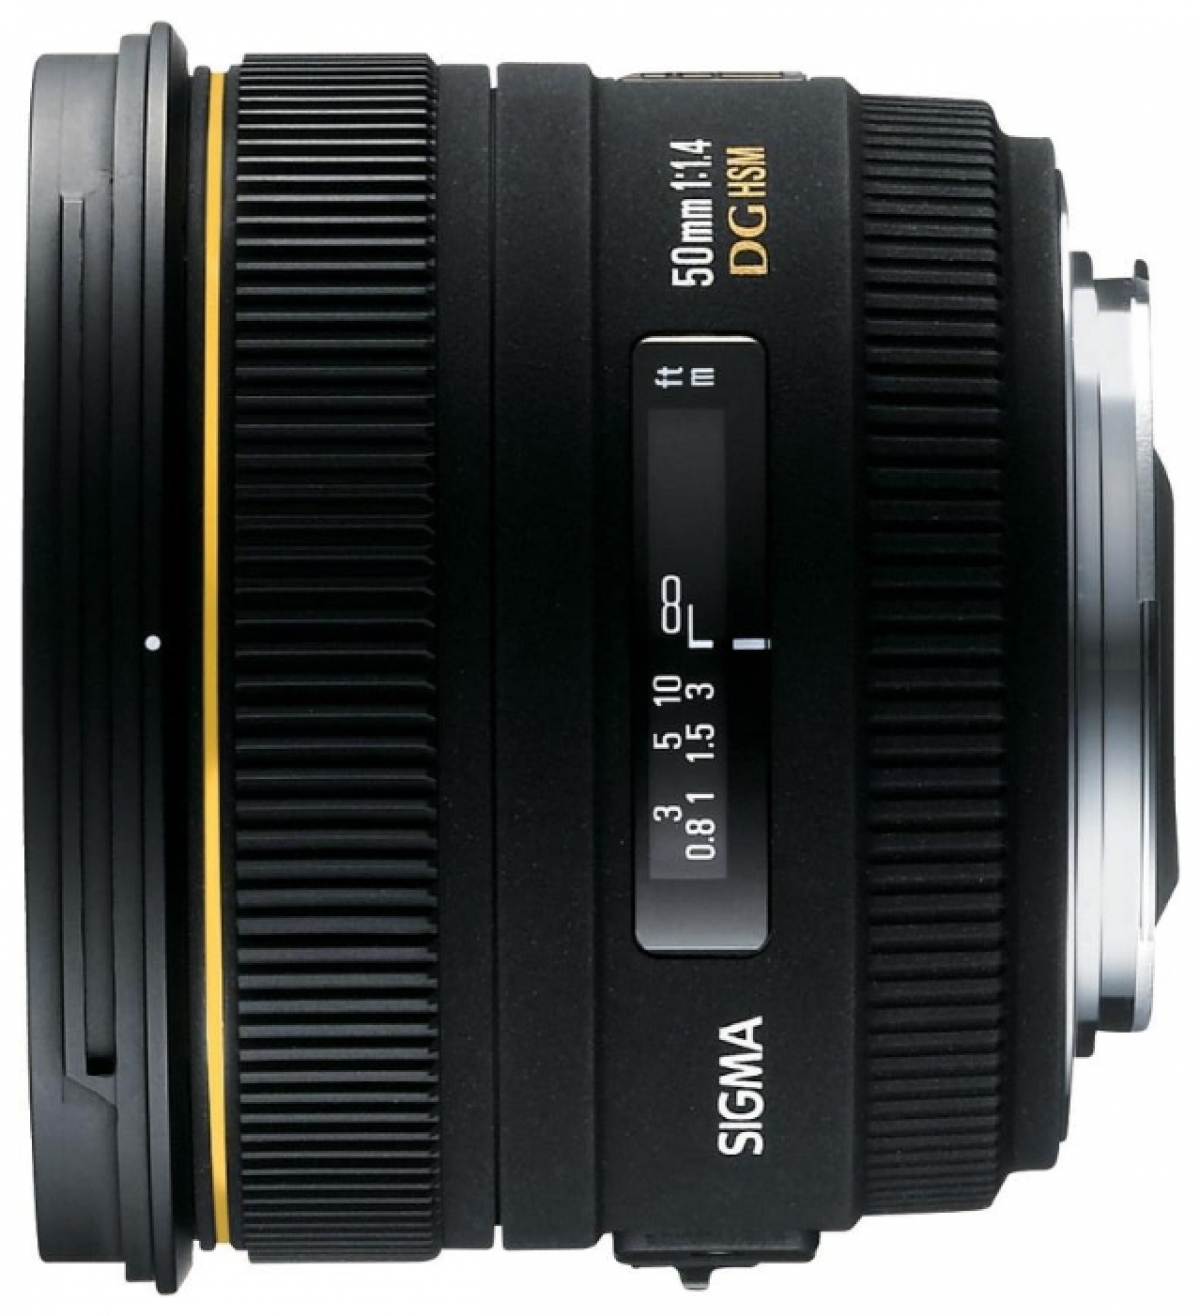 Sigma 50mm 1.4 hsm. Sigma 50mm 1.4 Canon. Sigma af 50mm f/1.4 ex. Sigma 50mm 1.4 ex DG HSM Canon. Sigma 50mm 1.4 Nikon.